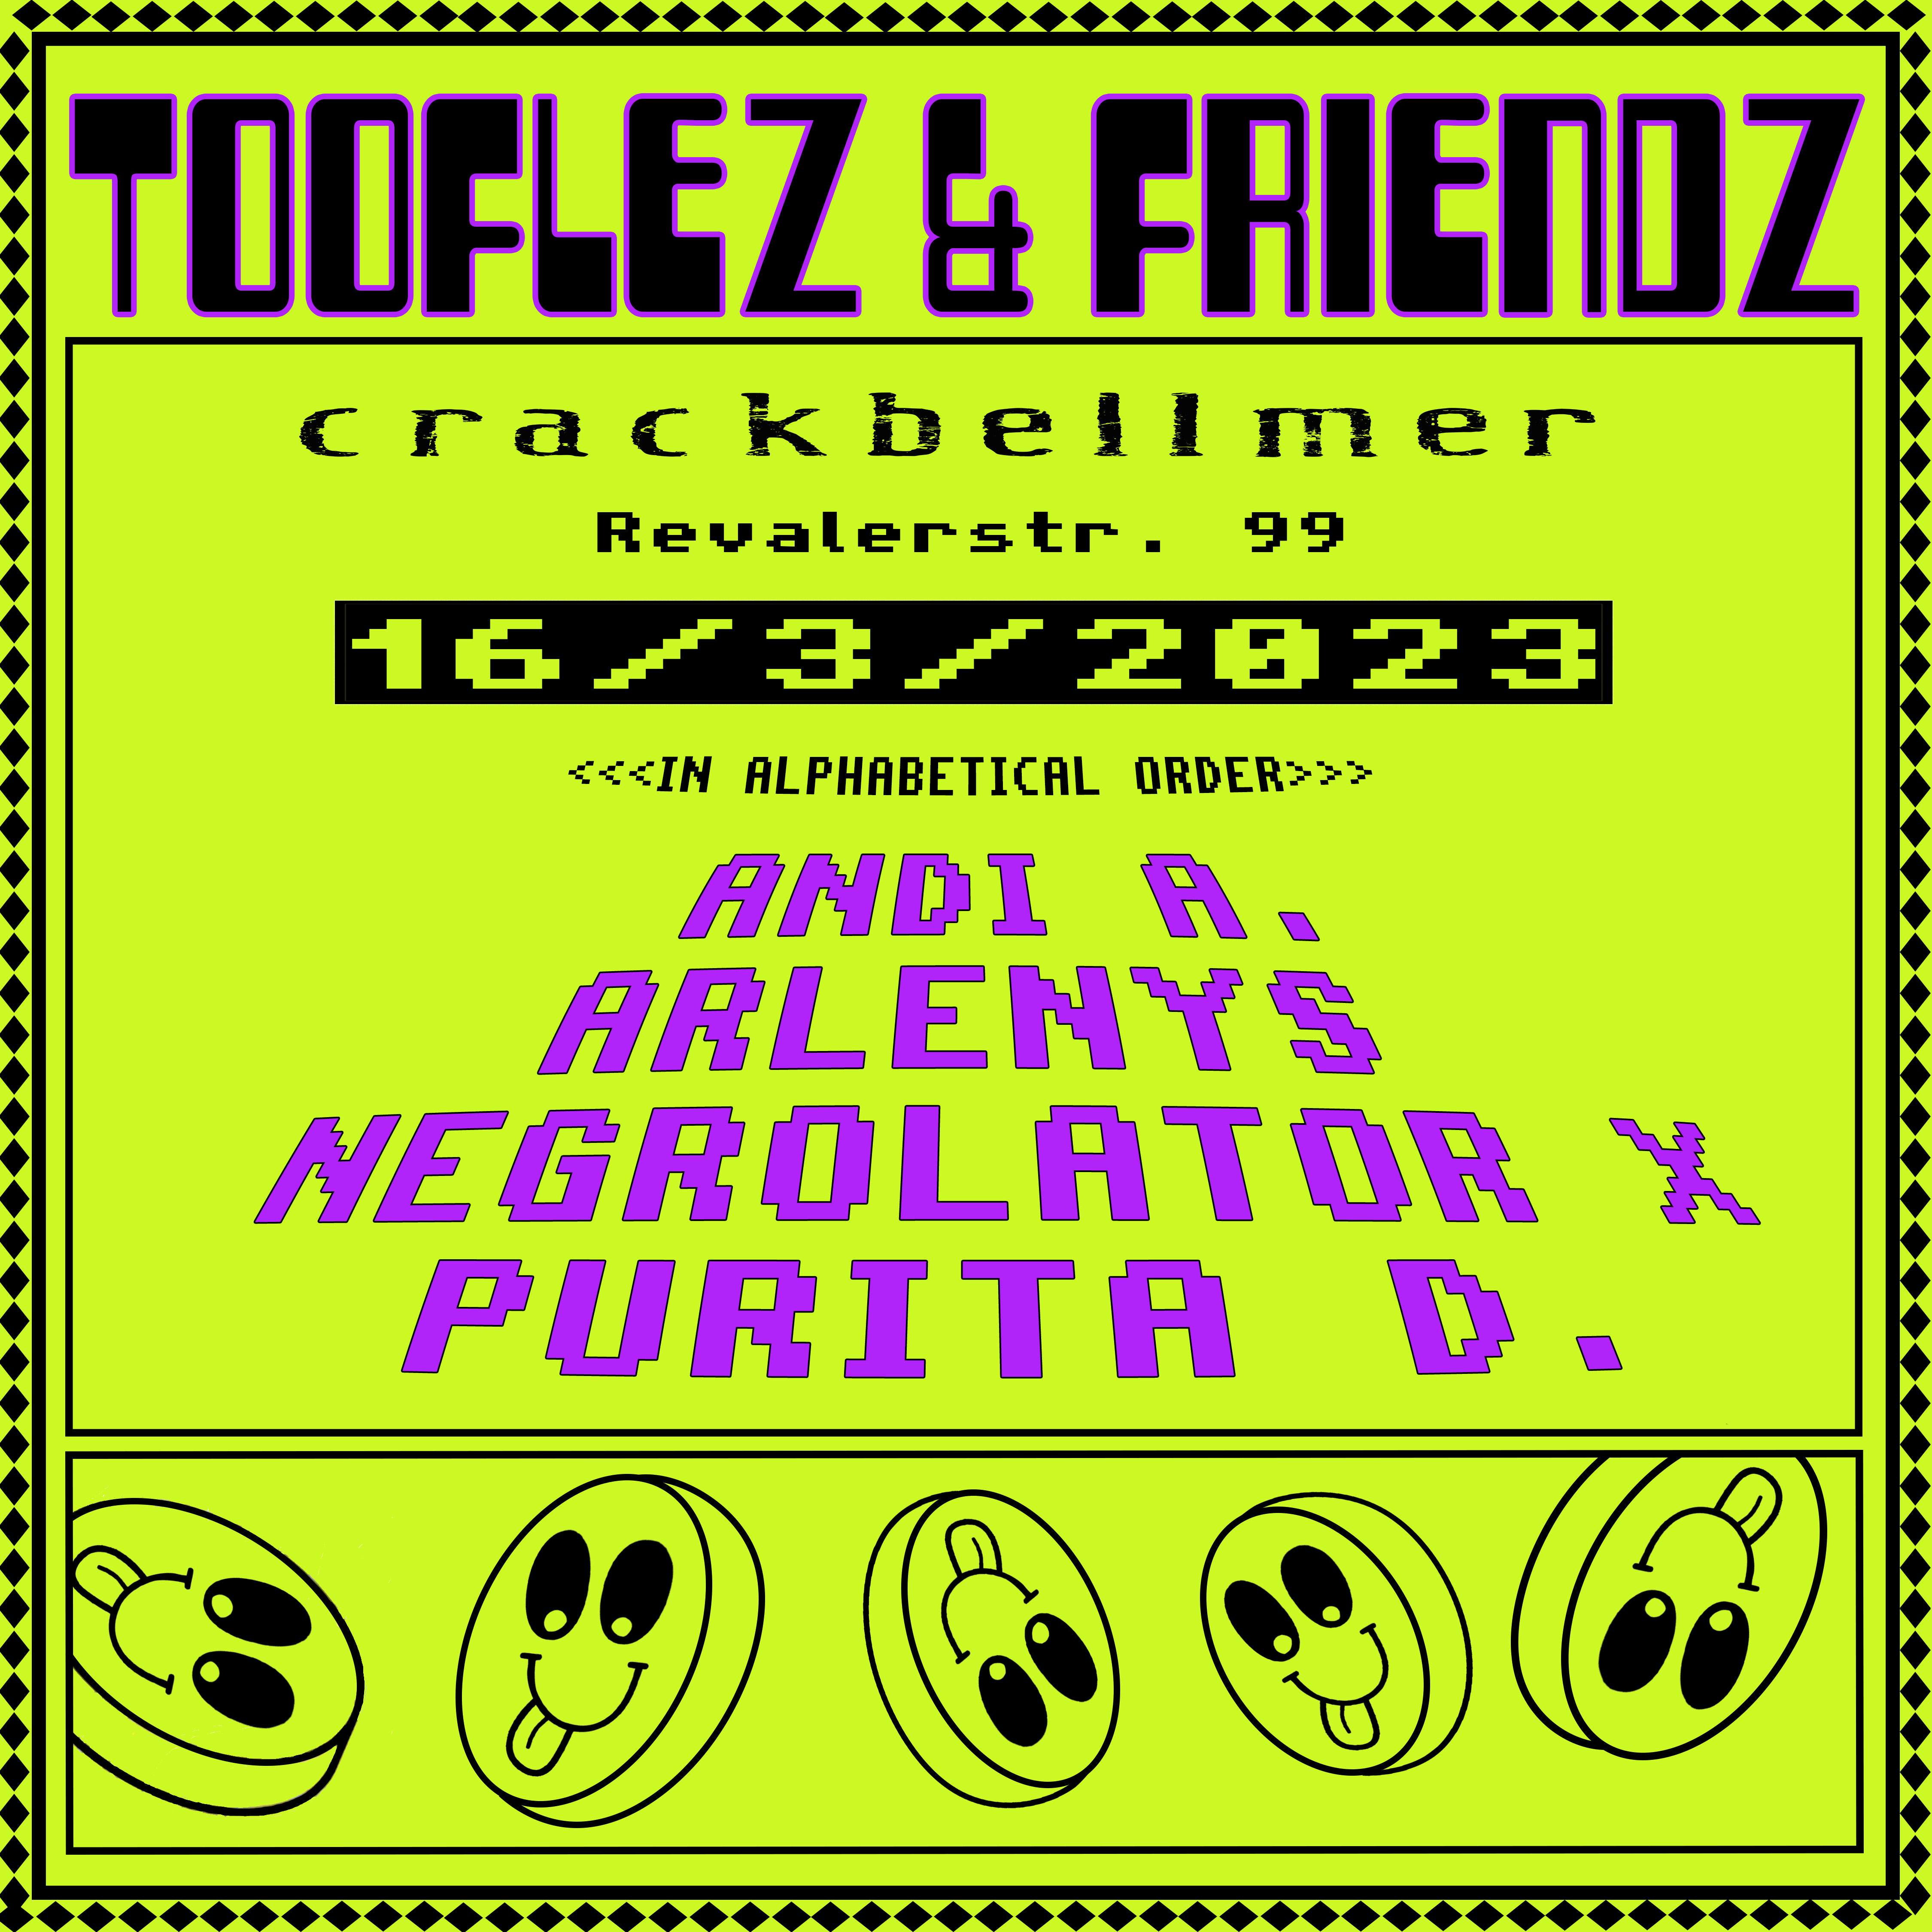 Tooflez & Friendz w/ Arlenys, ANDI A., Negrolator x, Purita D - フライヤー表